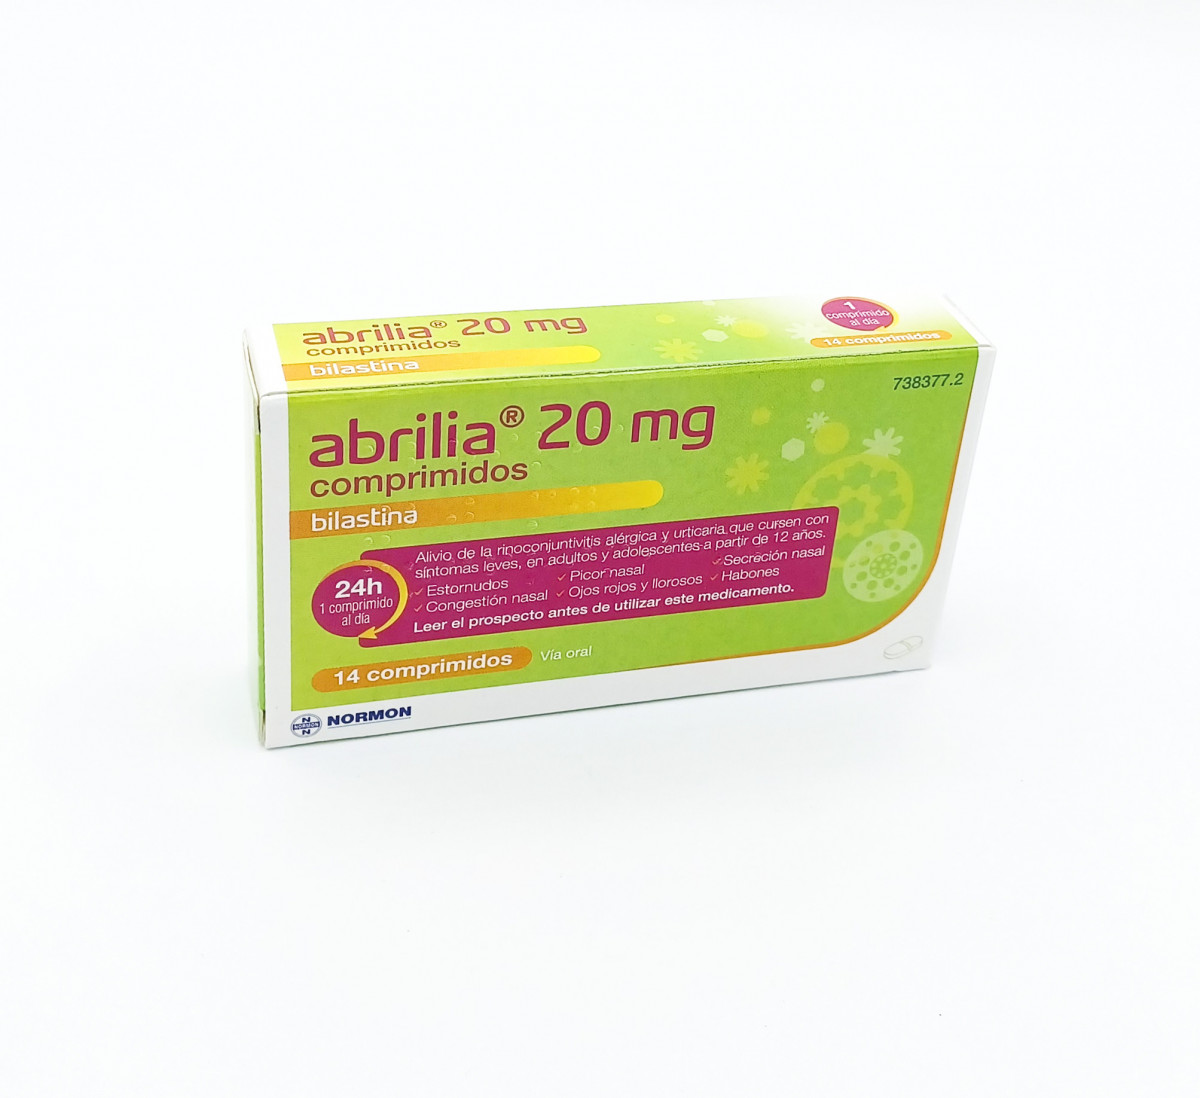 ABRILIA 20 MG COMPRIMIDOS EFG, 7 comprimidos (Blister Al/Al/PA-PVC) fotografía del envase.